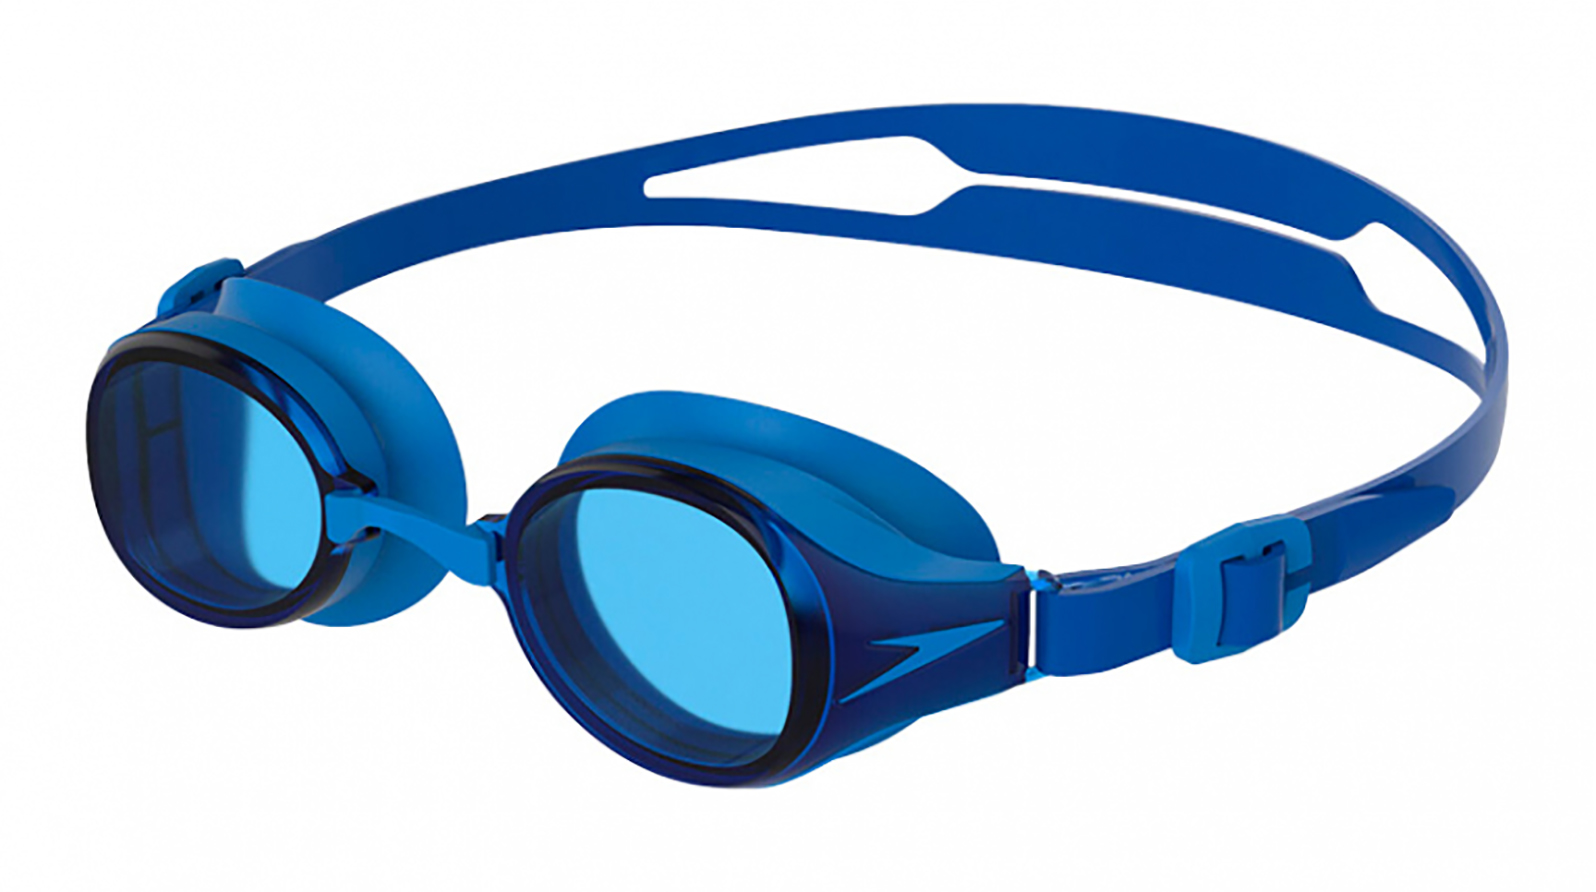 Speedo Очки для плавания Hydropure Optical F809 -4.5 speedo очки для плавания hydropure optical f808 2 5